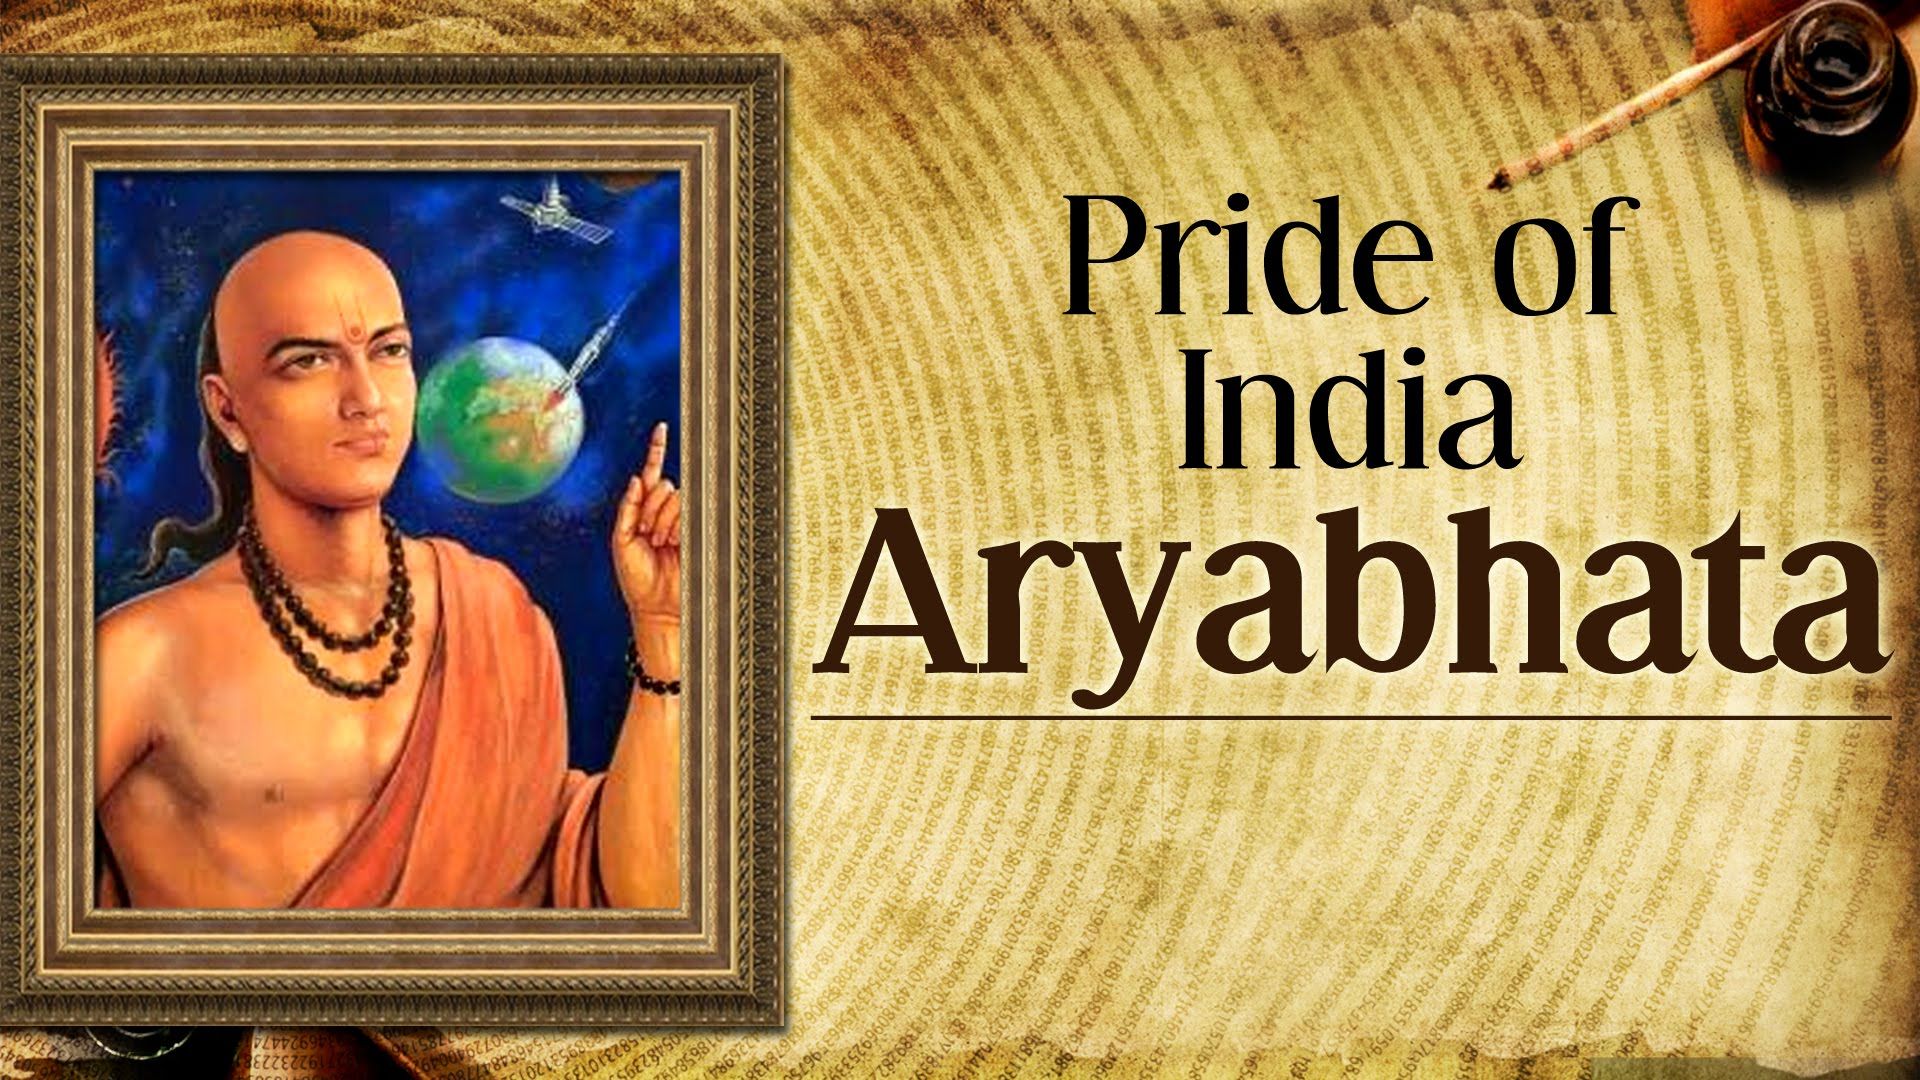 Biography of Aryabhata